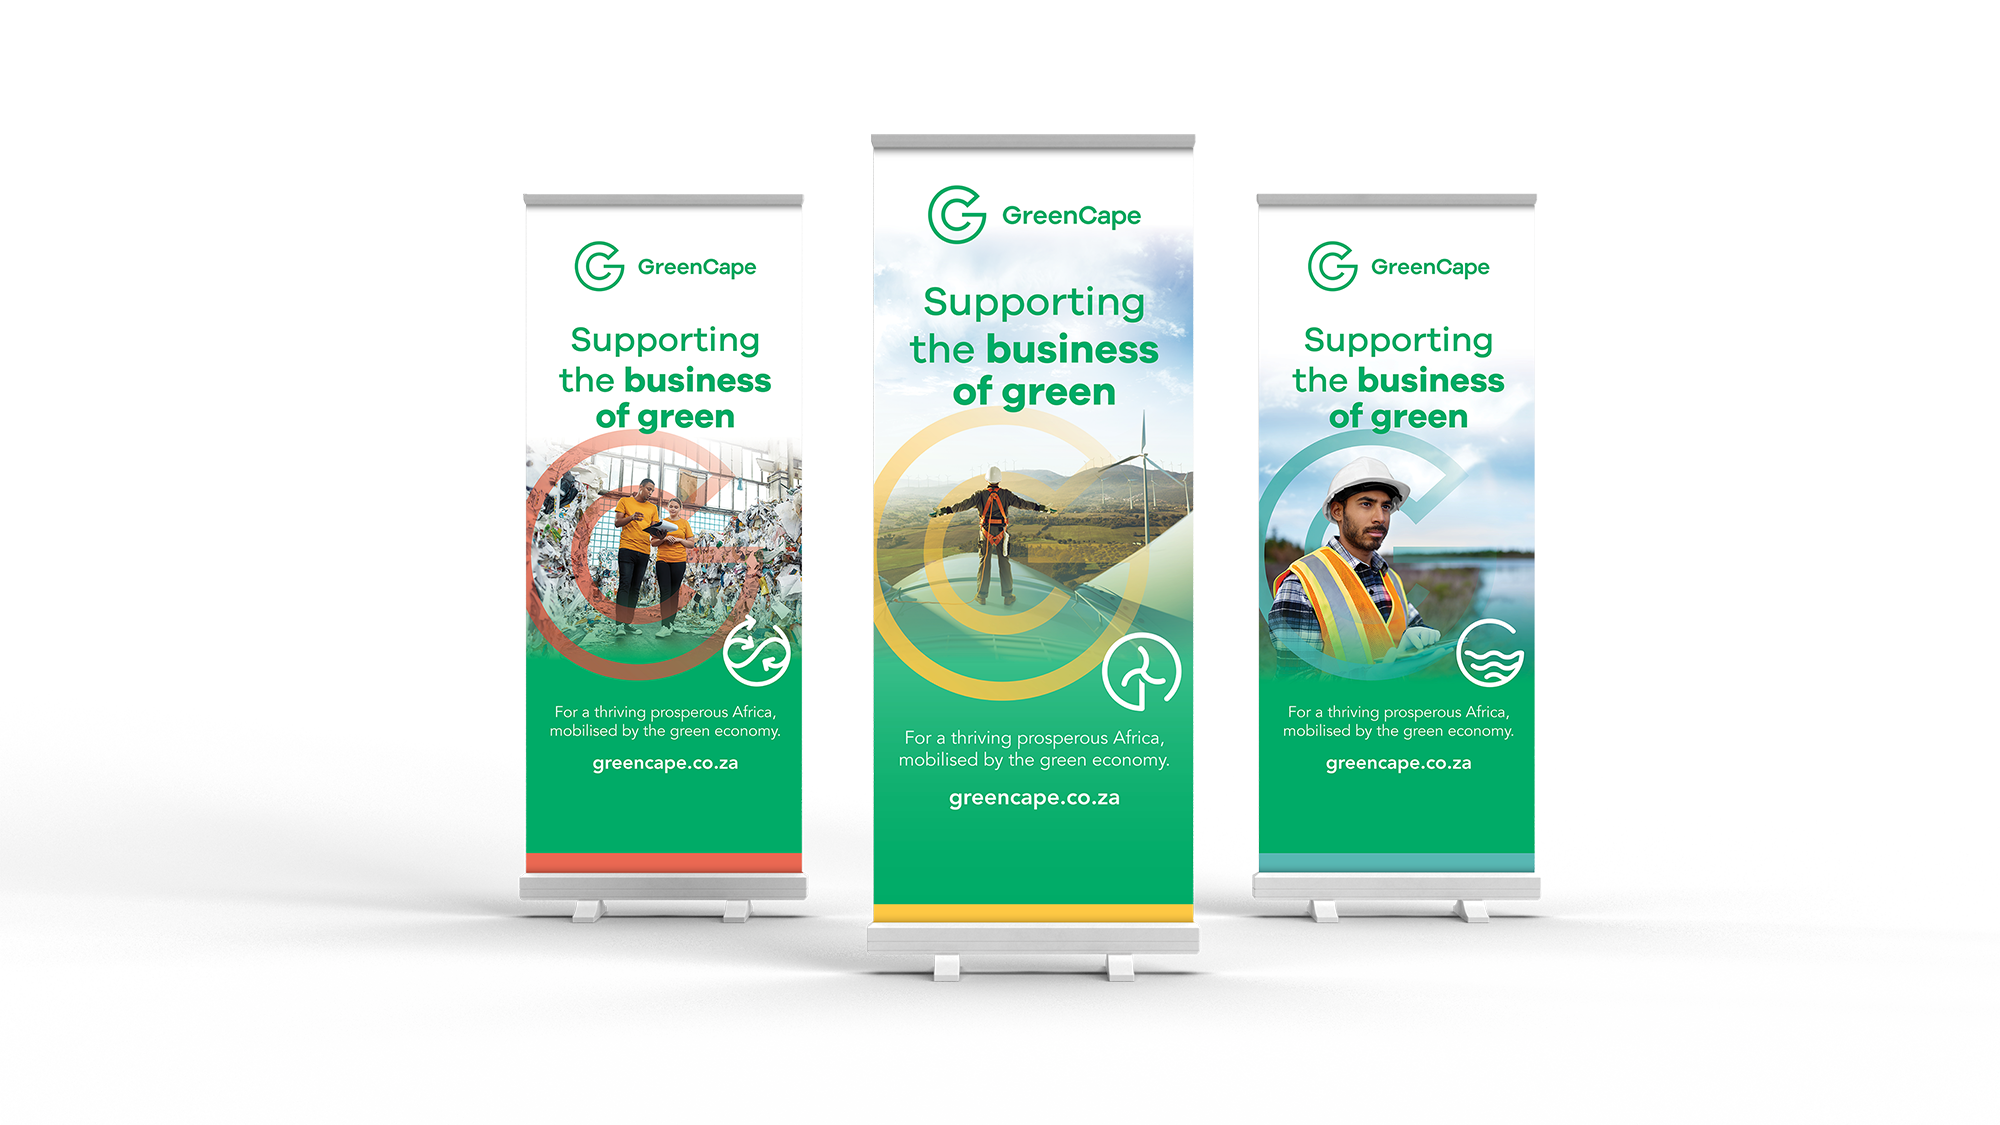 GreenCape – brand refresh